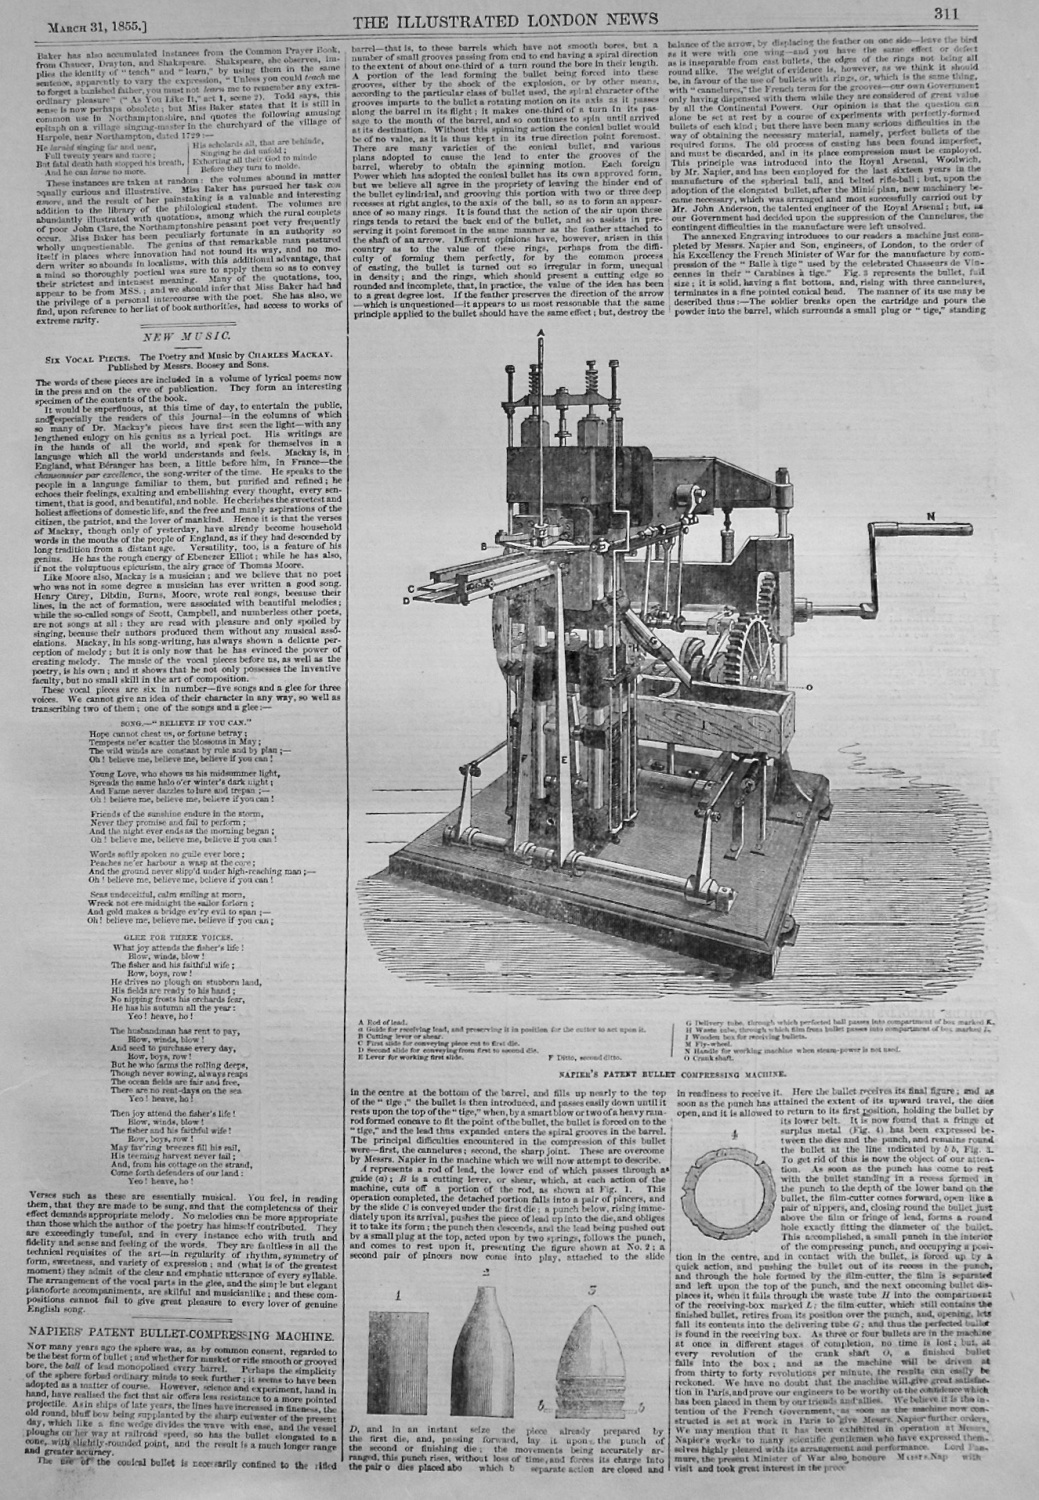 Napiers' Patent Bullet-Compressing Machine. 1855